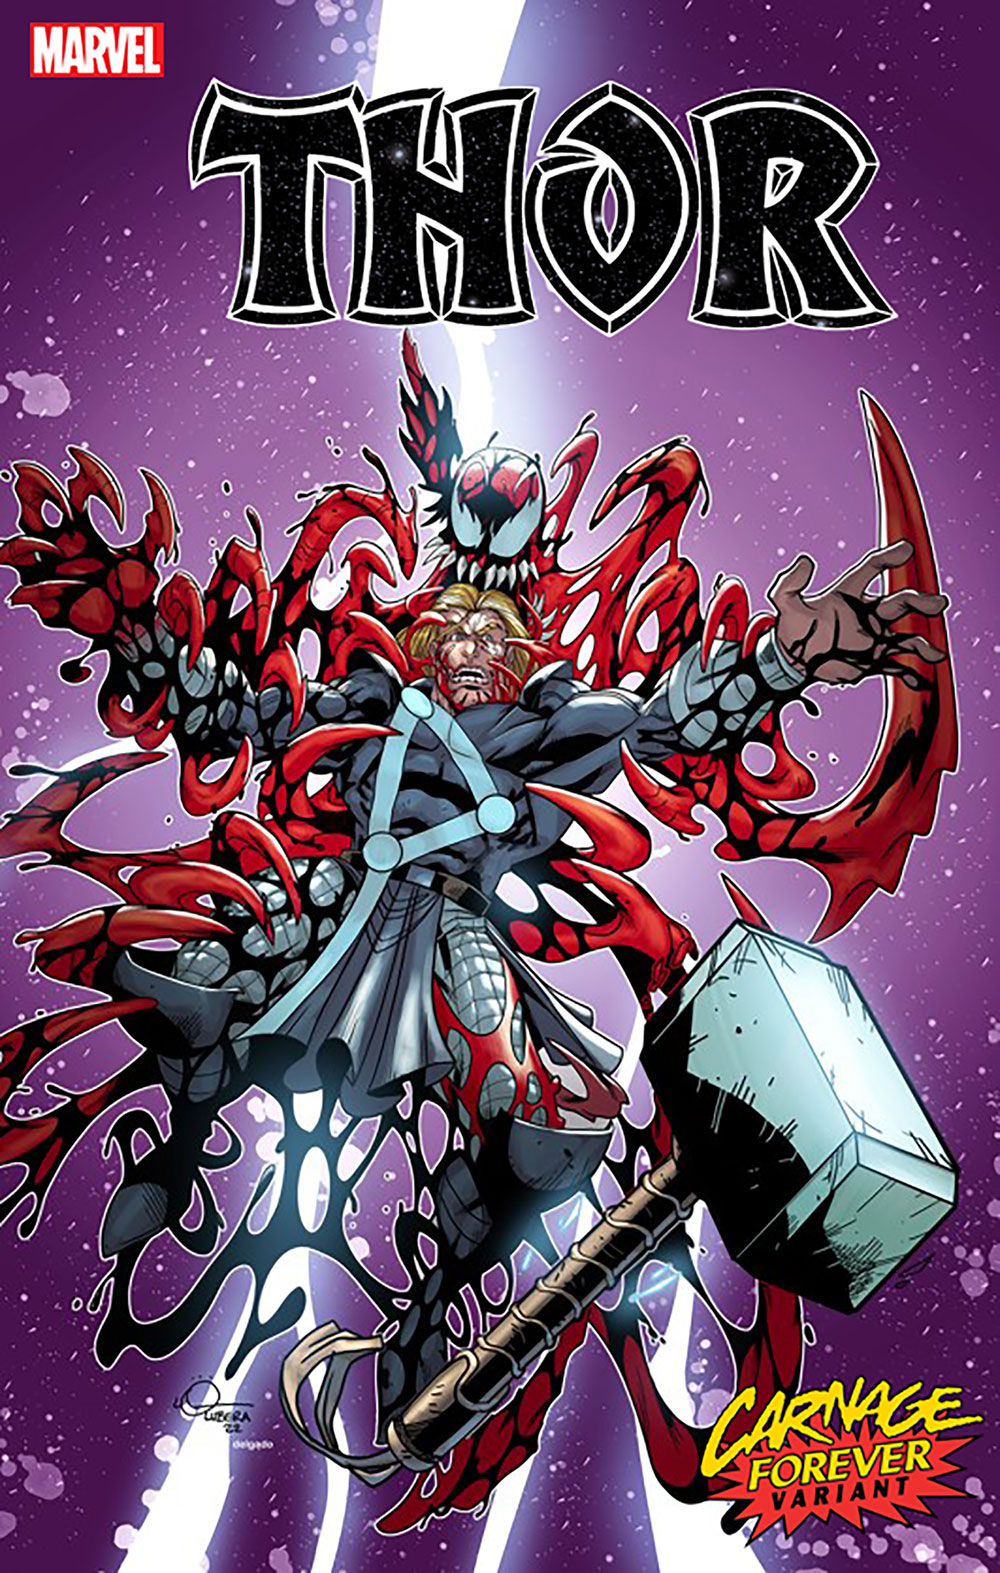 Thor #23 Lubera Carnage Forever Variant (2020)